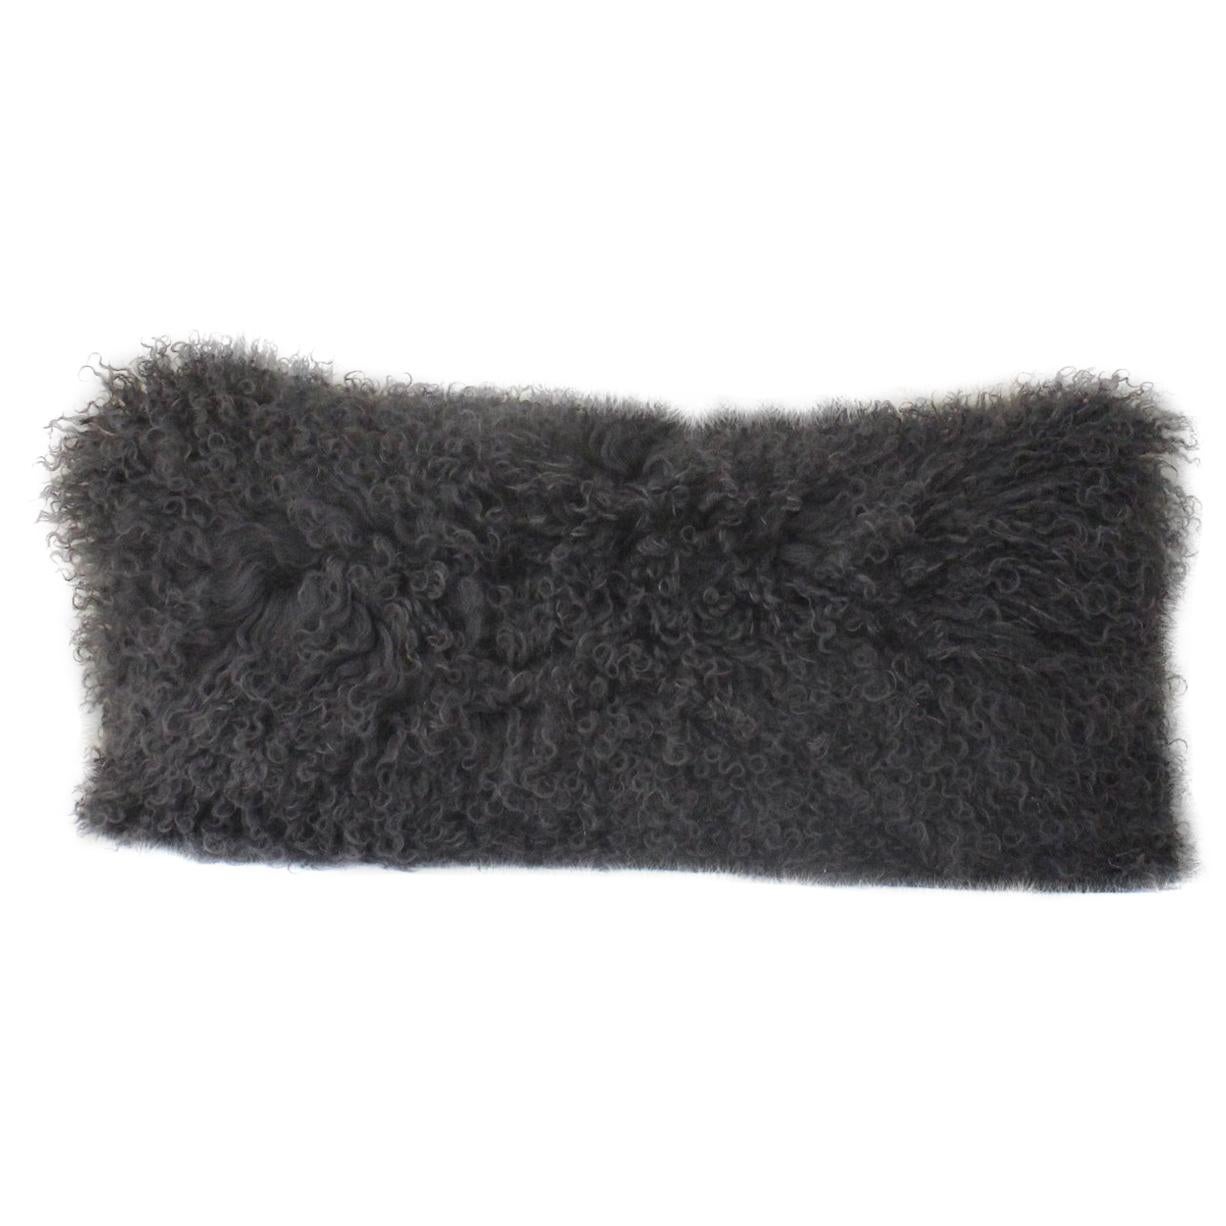 Charcoal Grey Mongolian Fur Pillow - Lumbar Sheepskin pillow